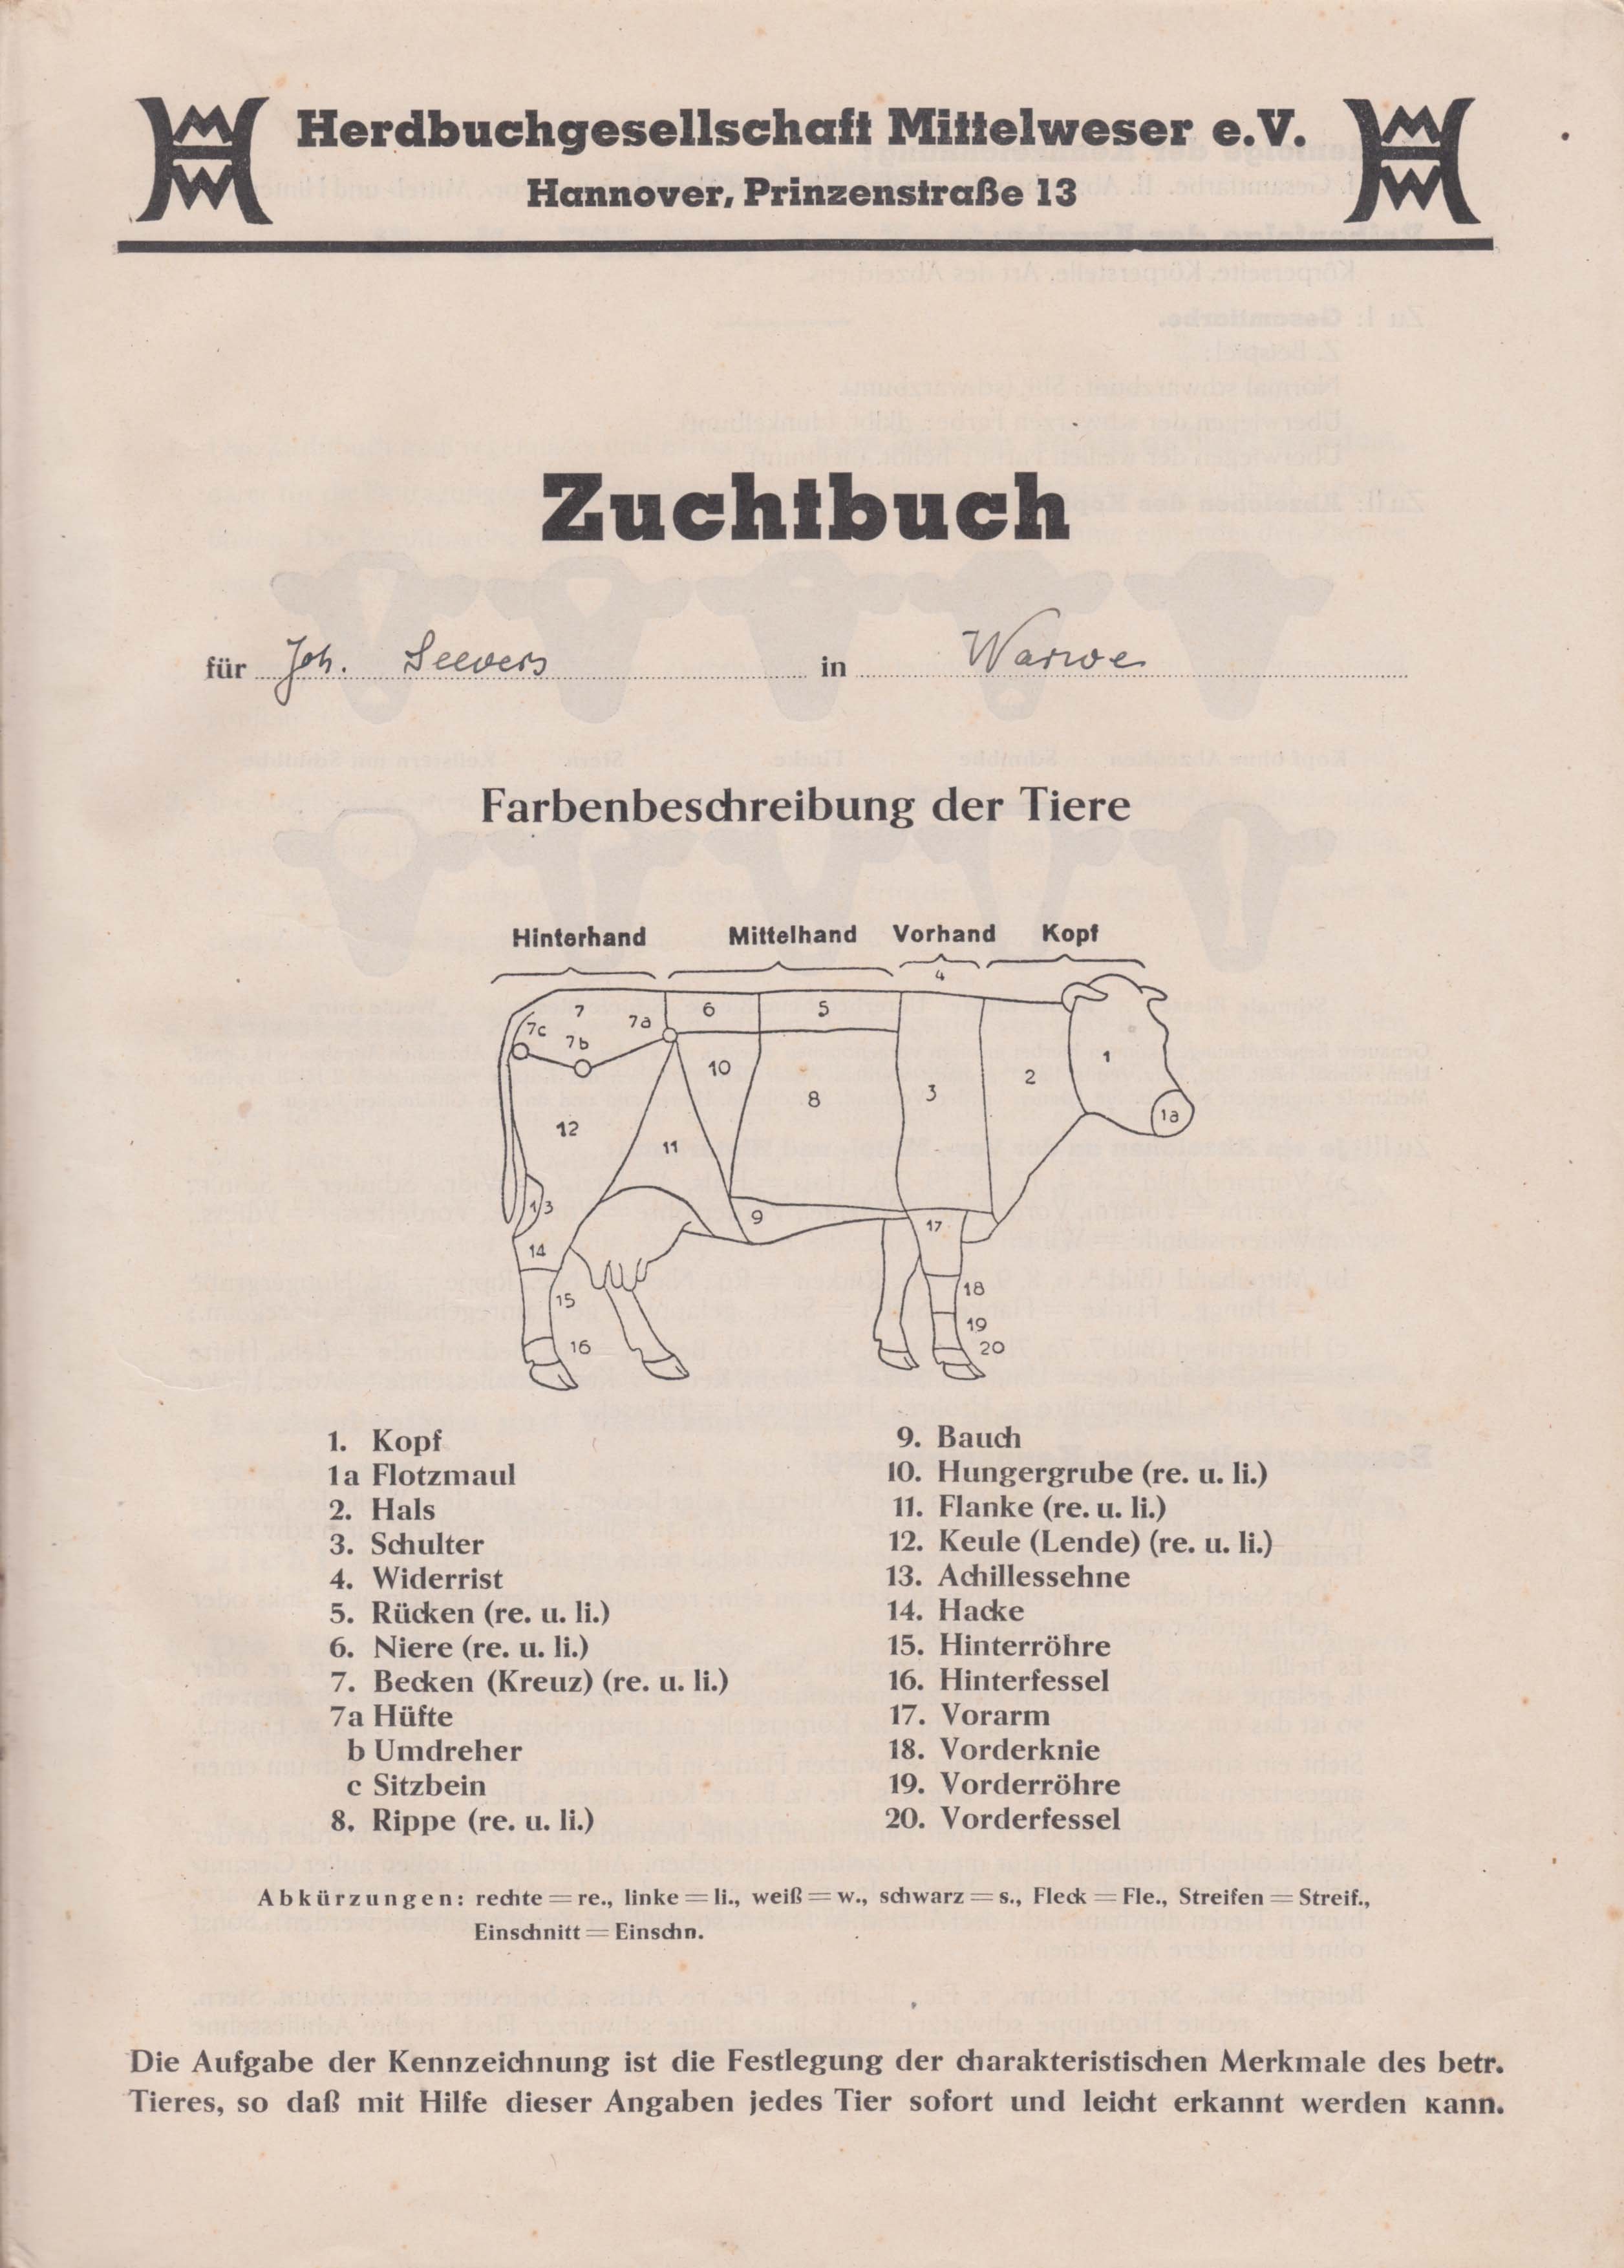 Zuchtbuch für Johann Seevers Warwe 4 (Kreismuseum Syke CC BY-NC-SA)